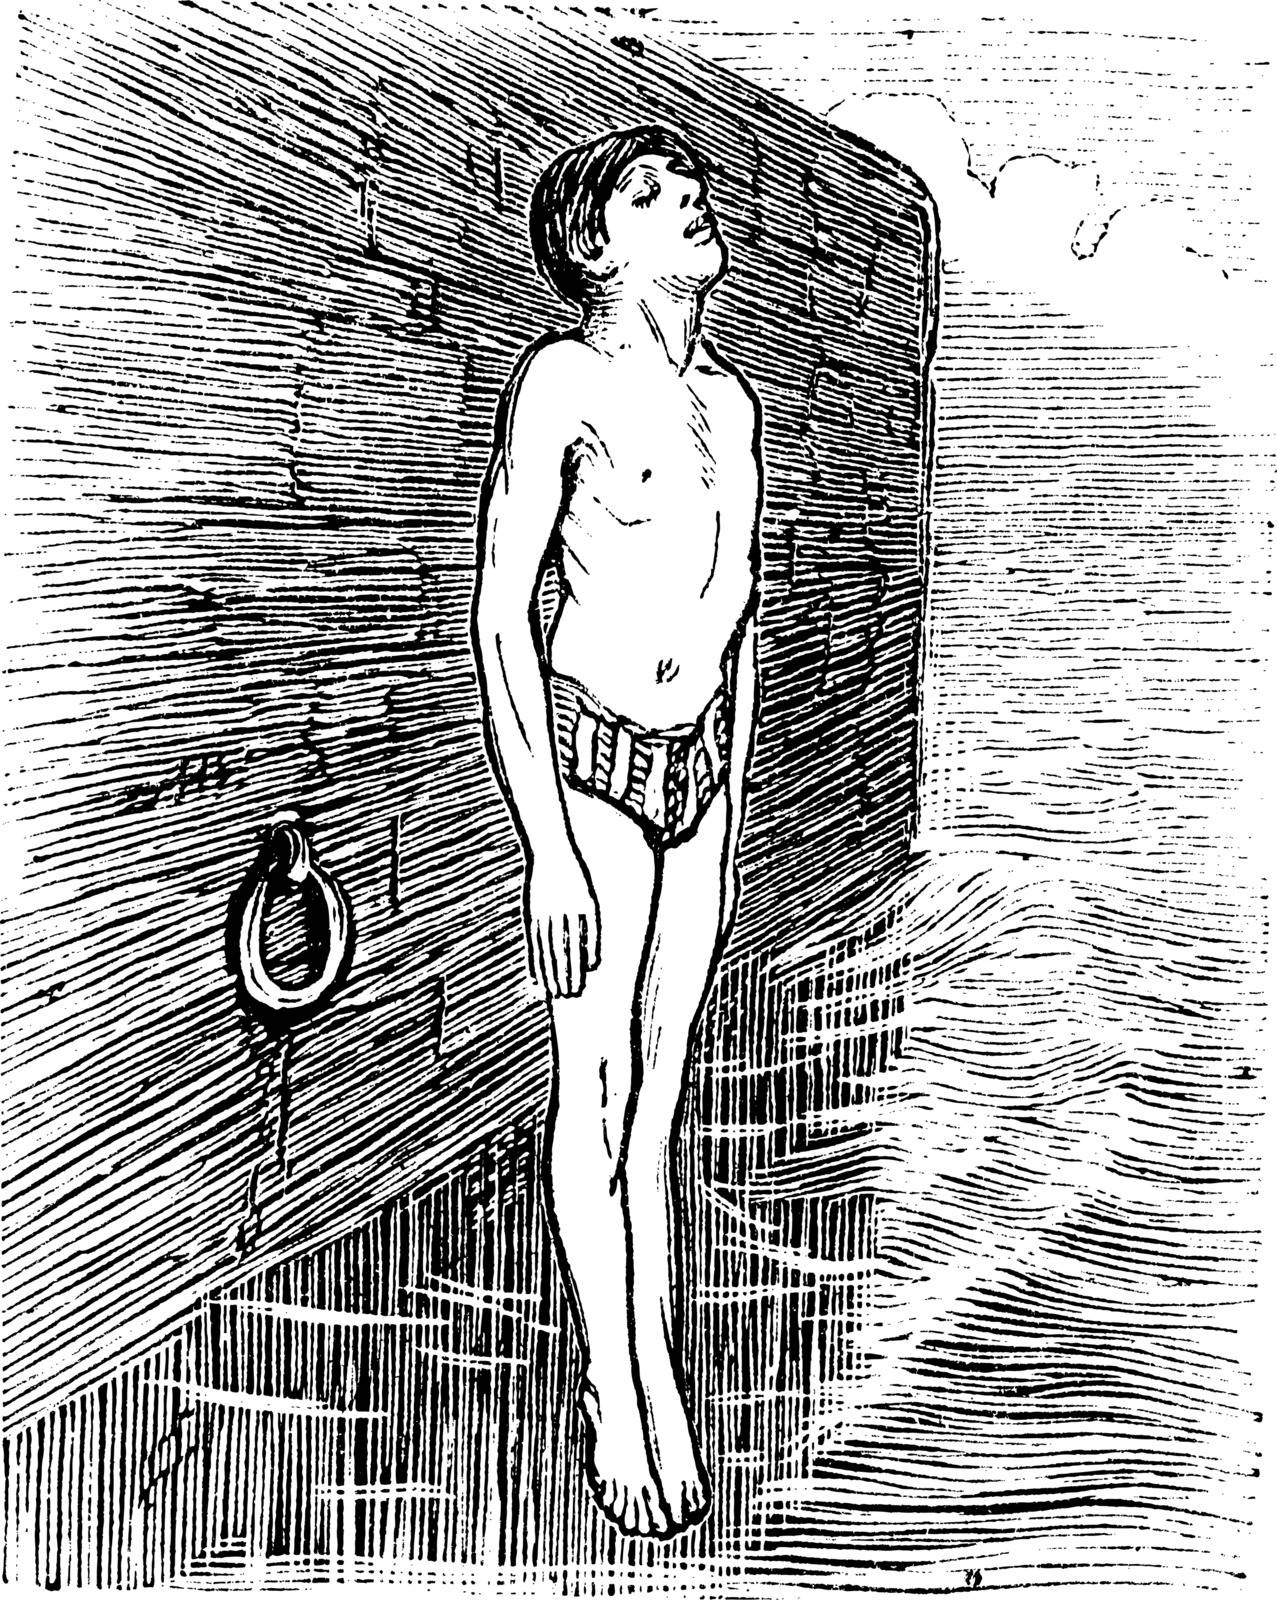 Diving Feet First, vintage engraved illustration by Morphart